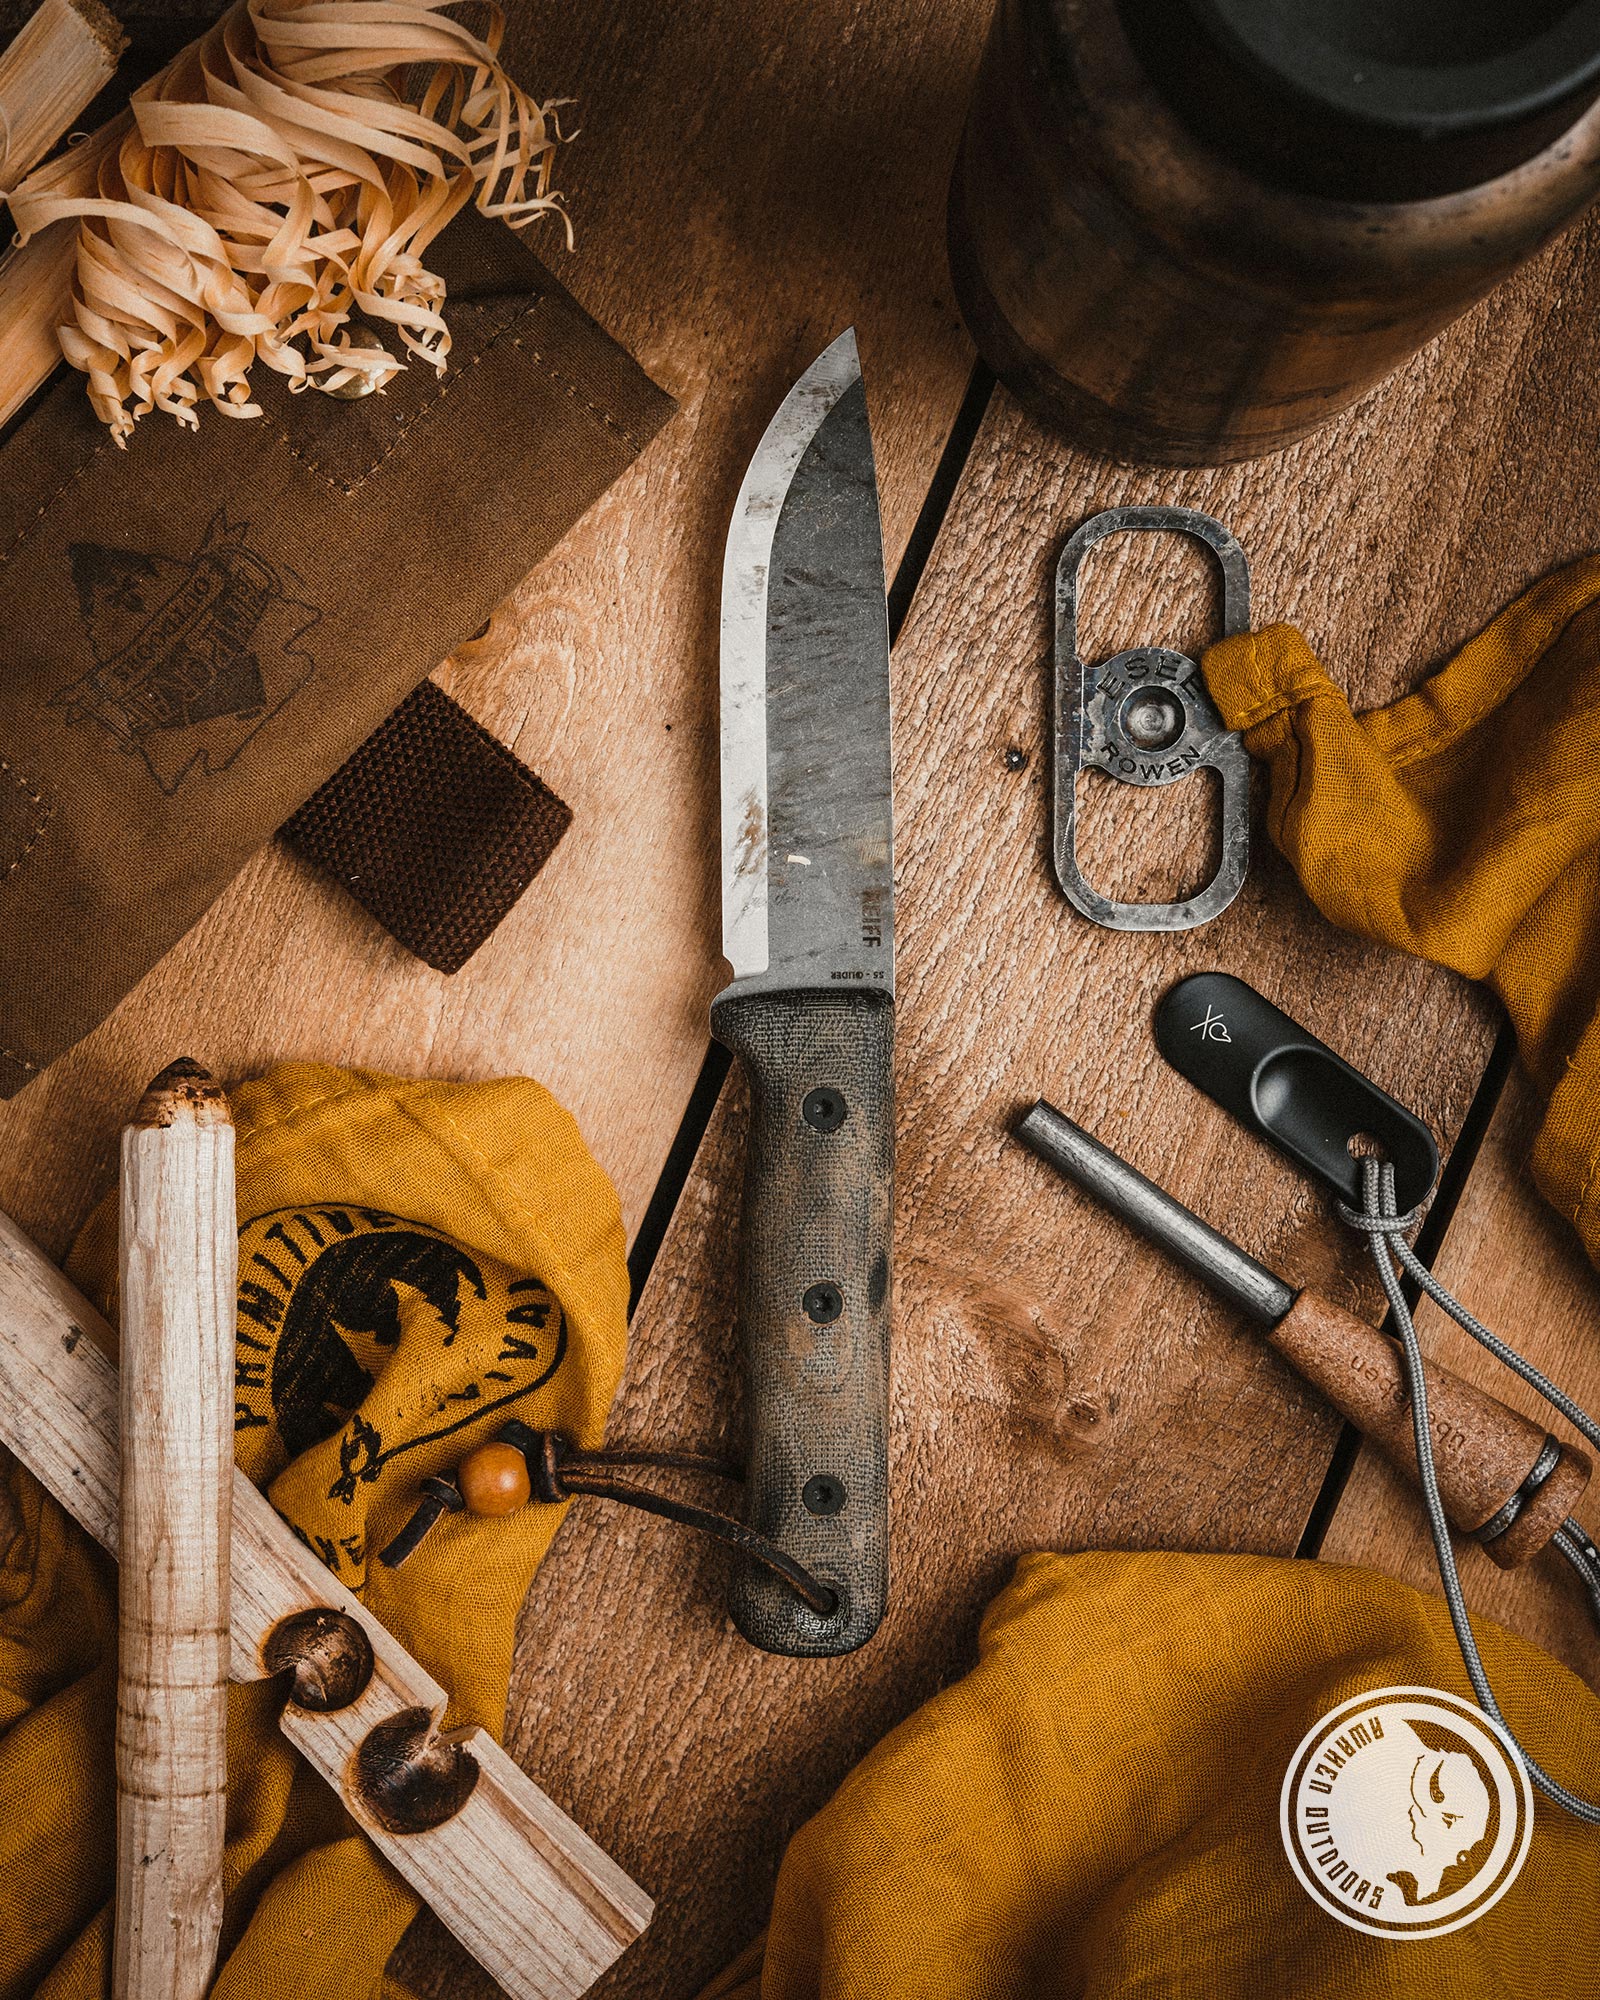 Reiff Knives S5 Bushcraft Knife Review